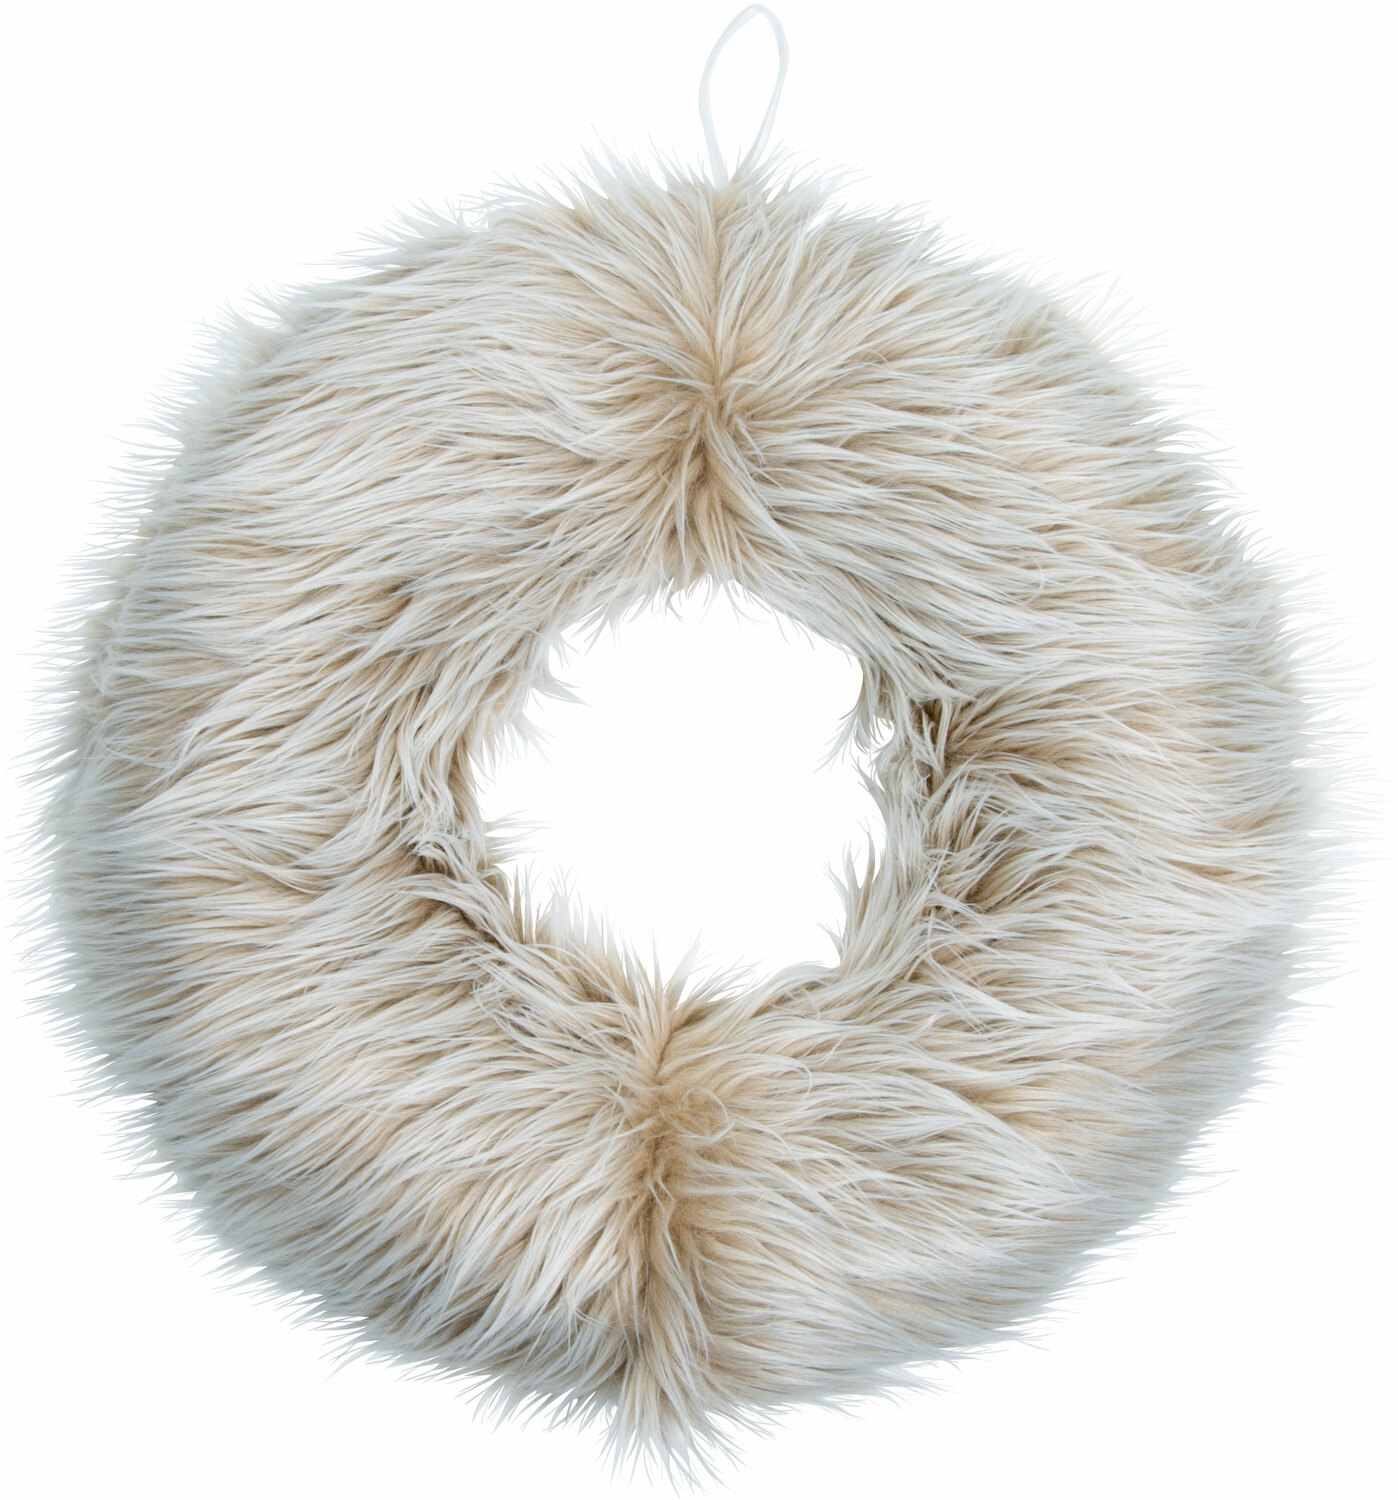 Cream Faux Fur by WarmHearts - Cream Faux Fur - 19" Wreath